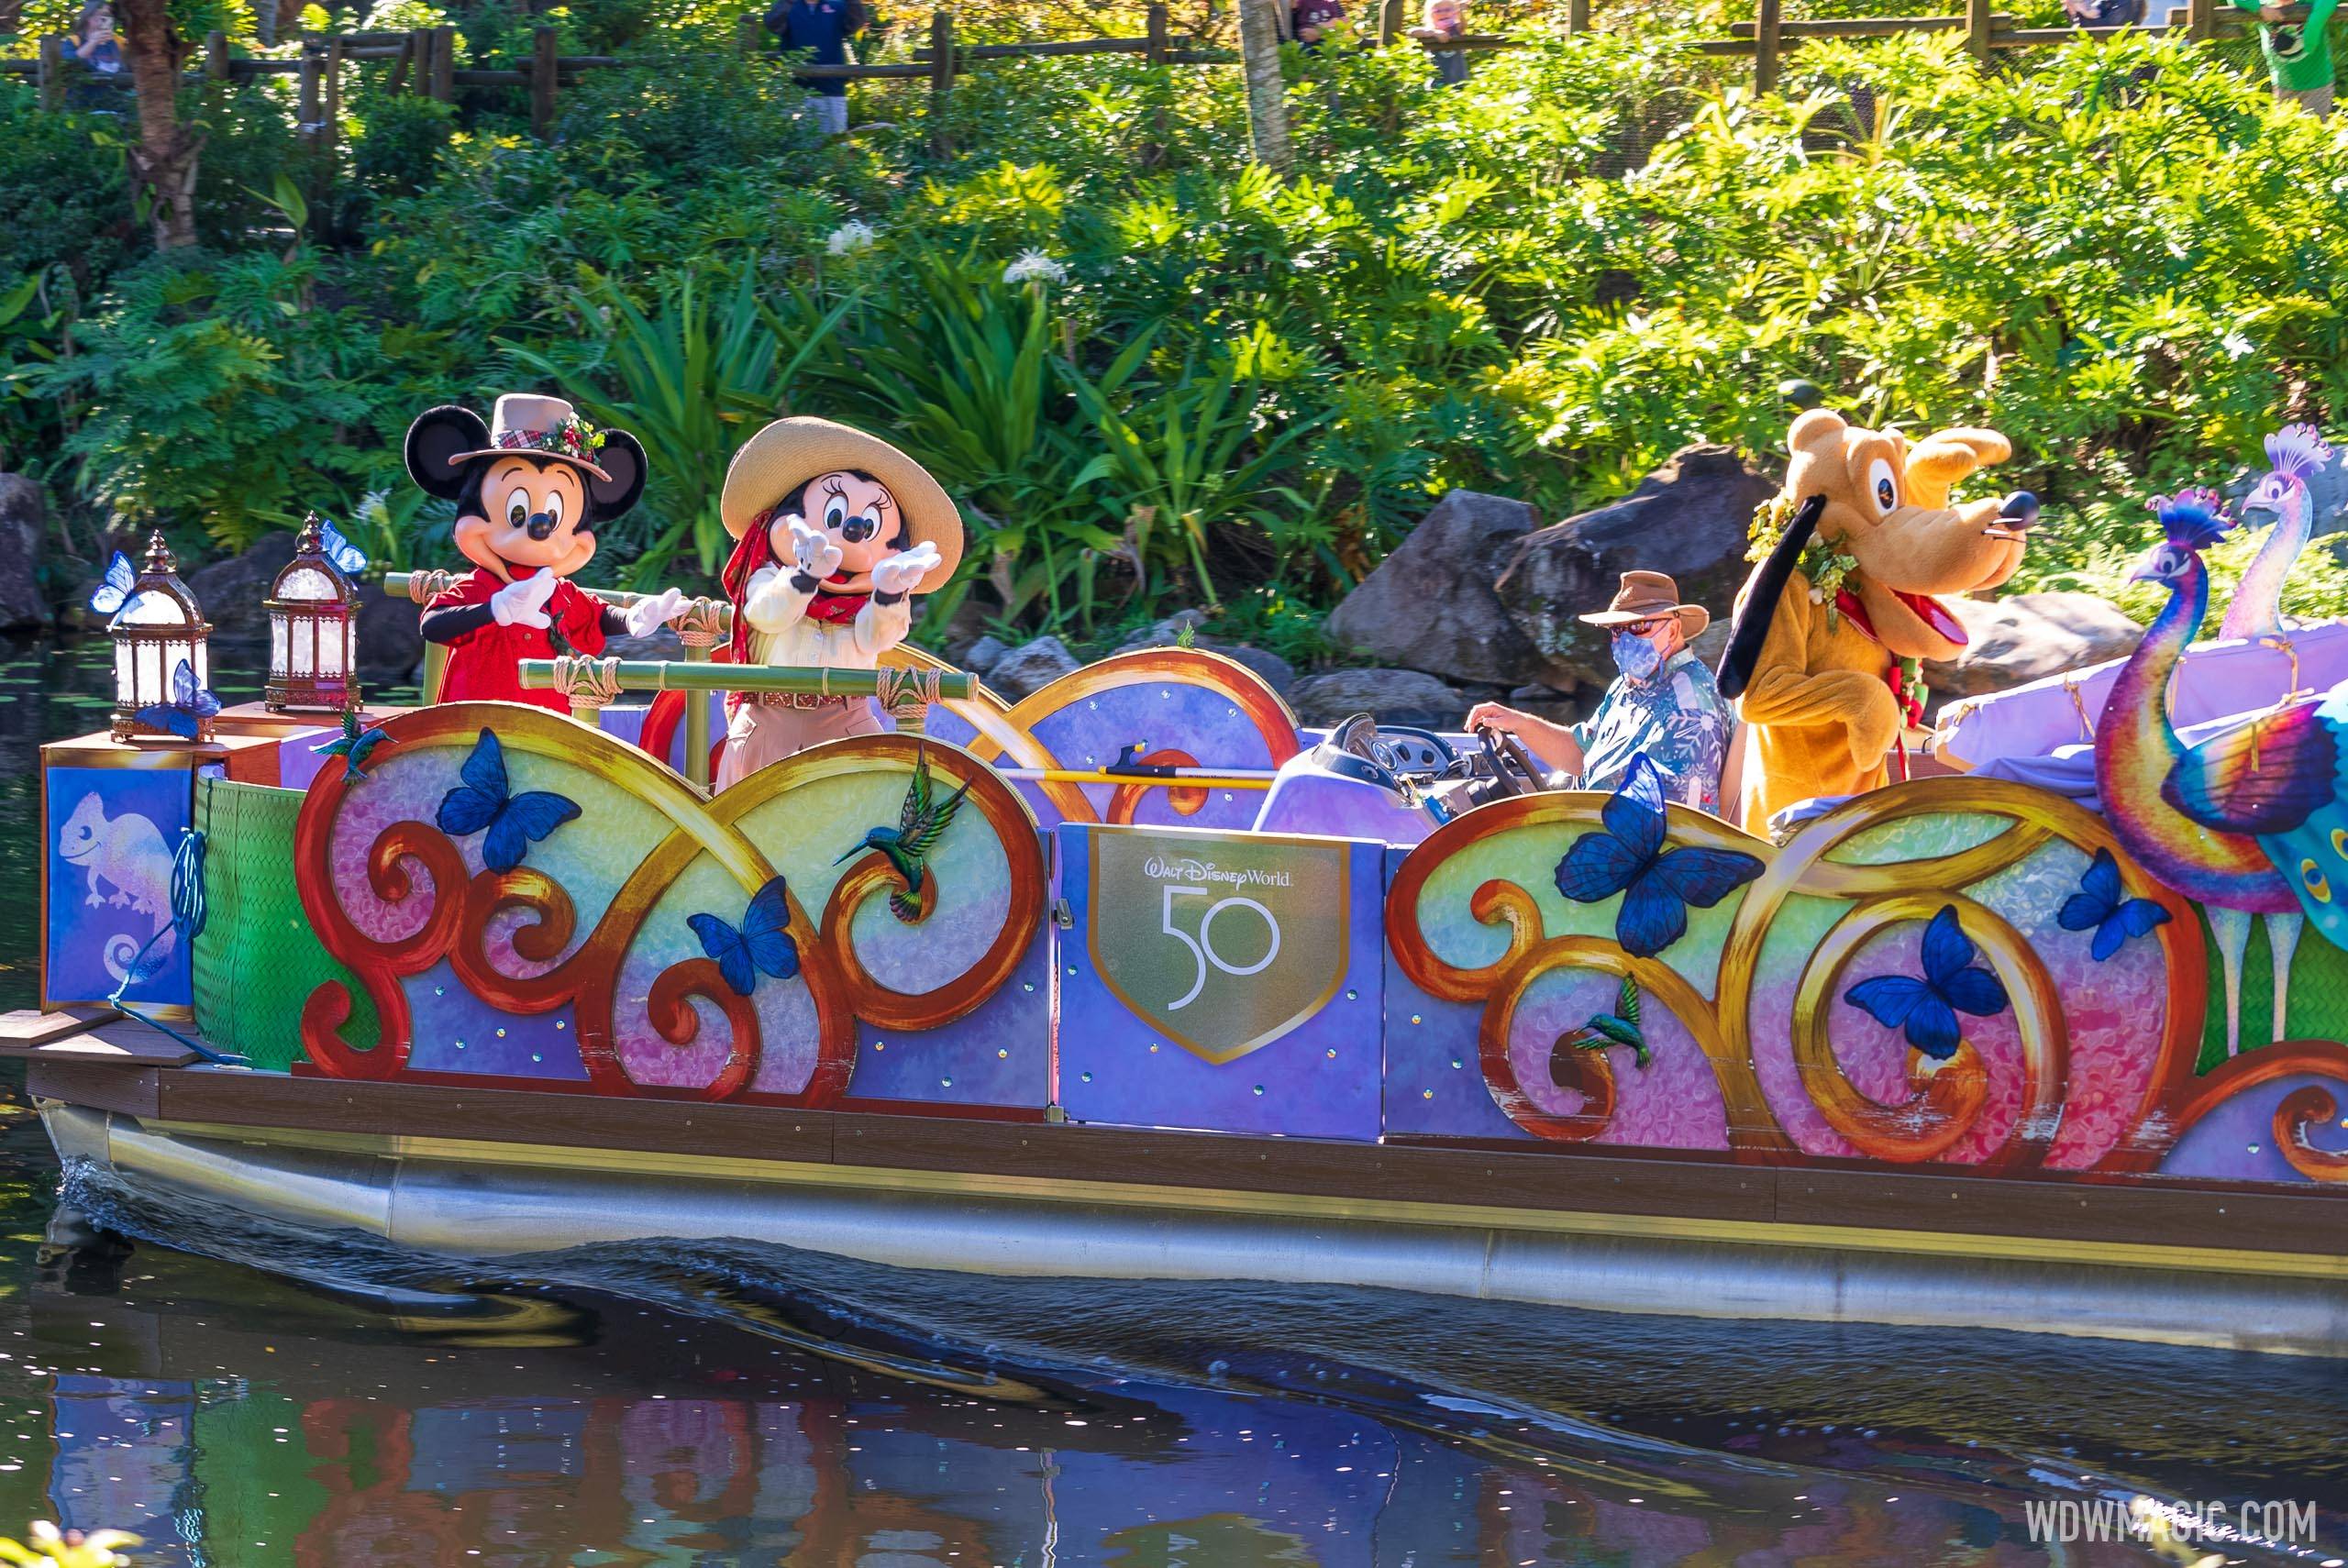 Mickey and Minnie's Festive Flotilla